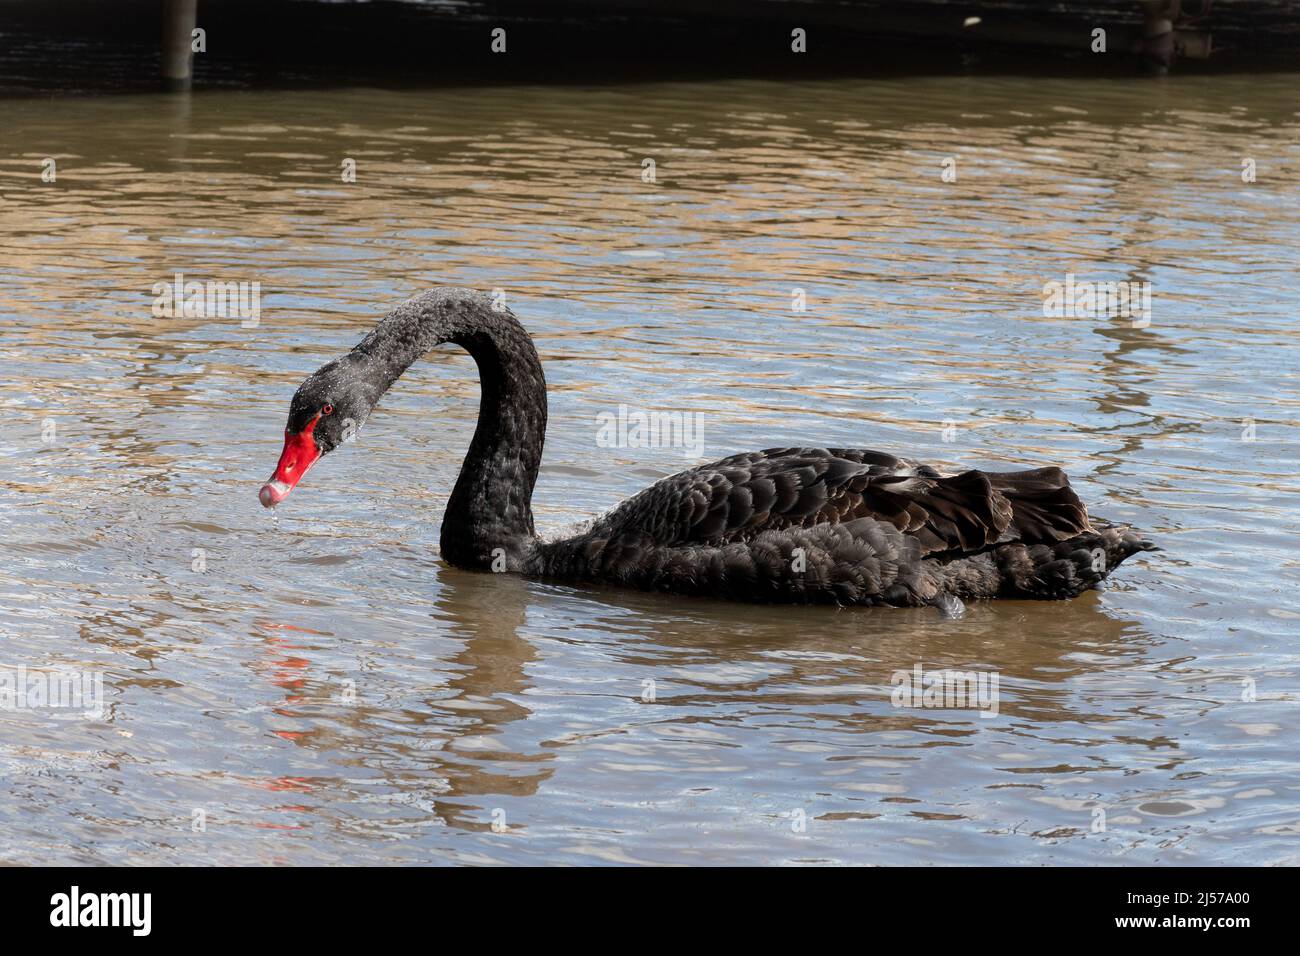 Black swan (Cygnus atratus), large bird species swimming on a lake Stock Photo